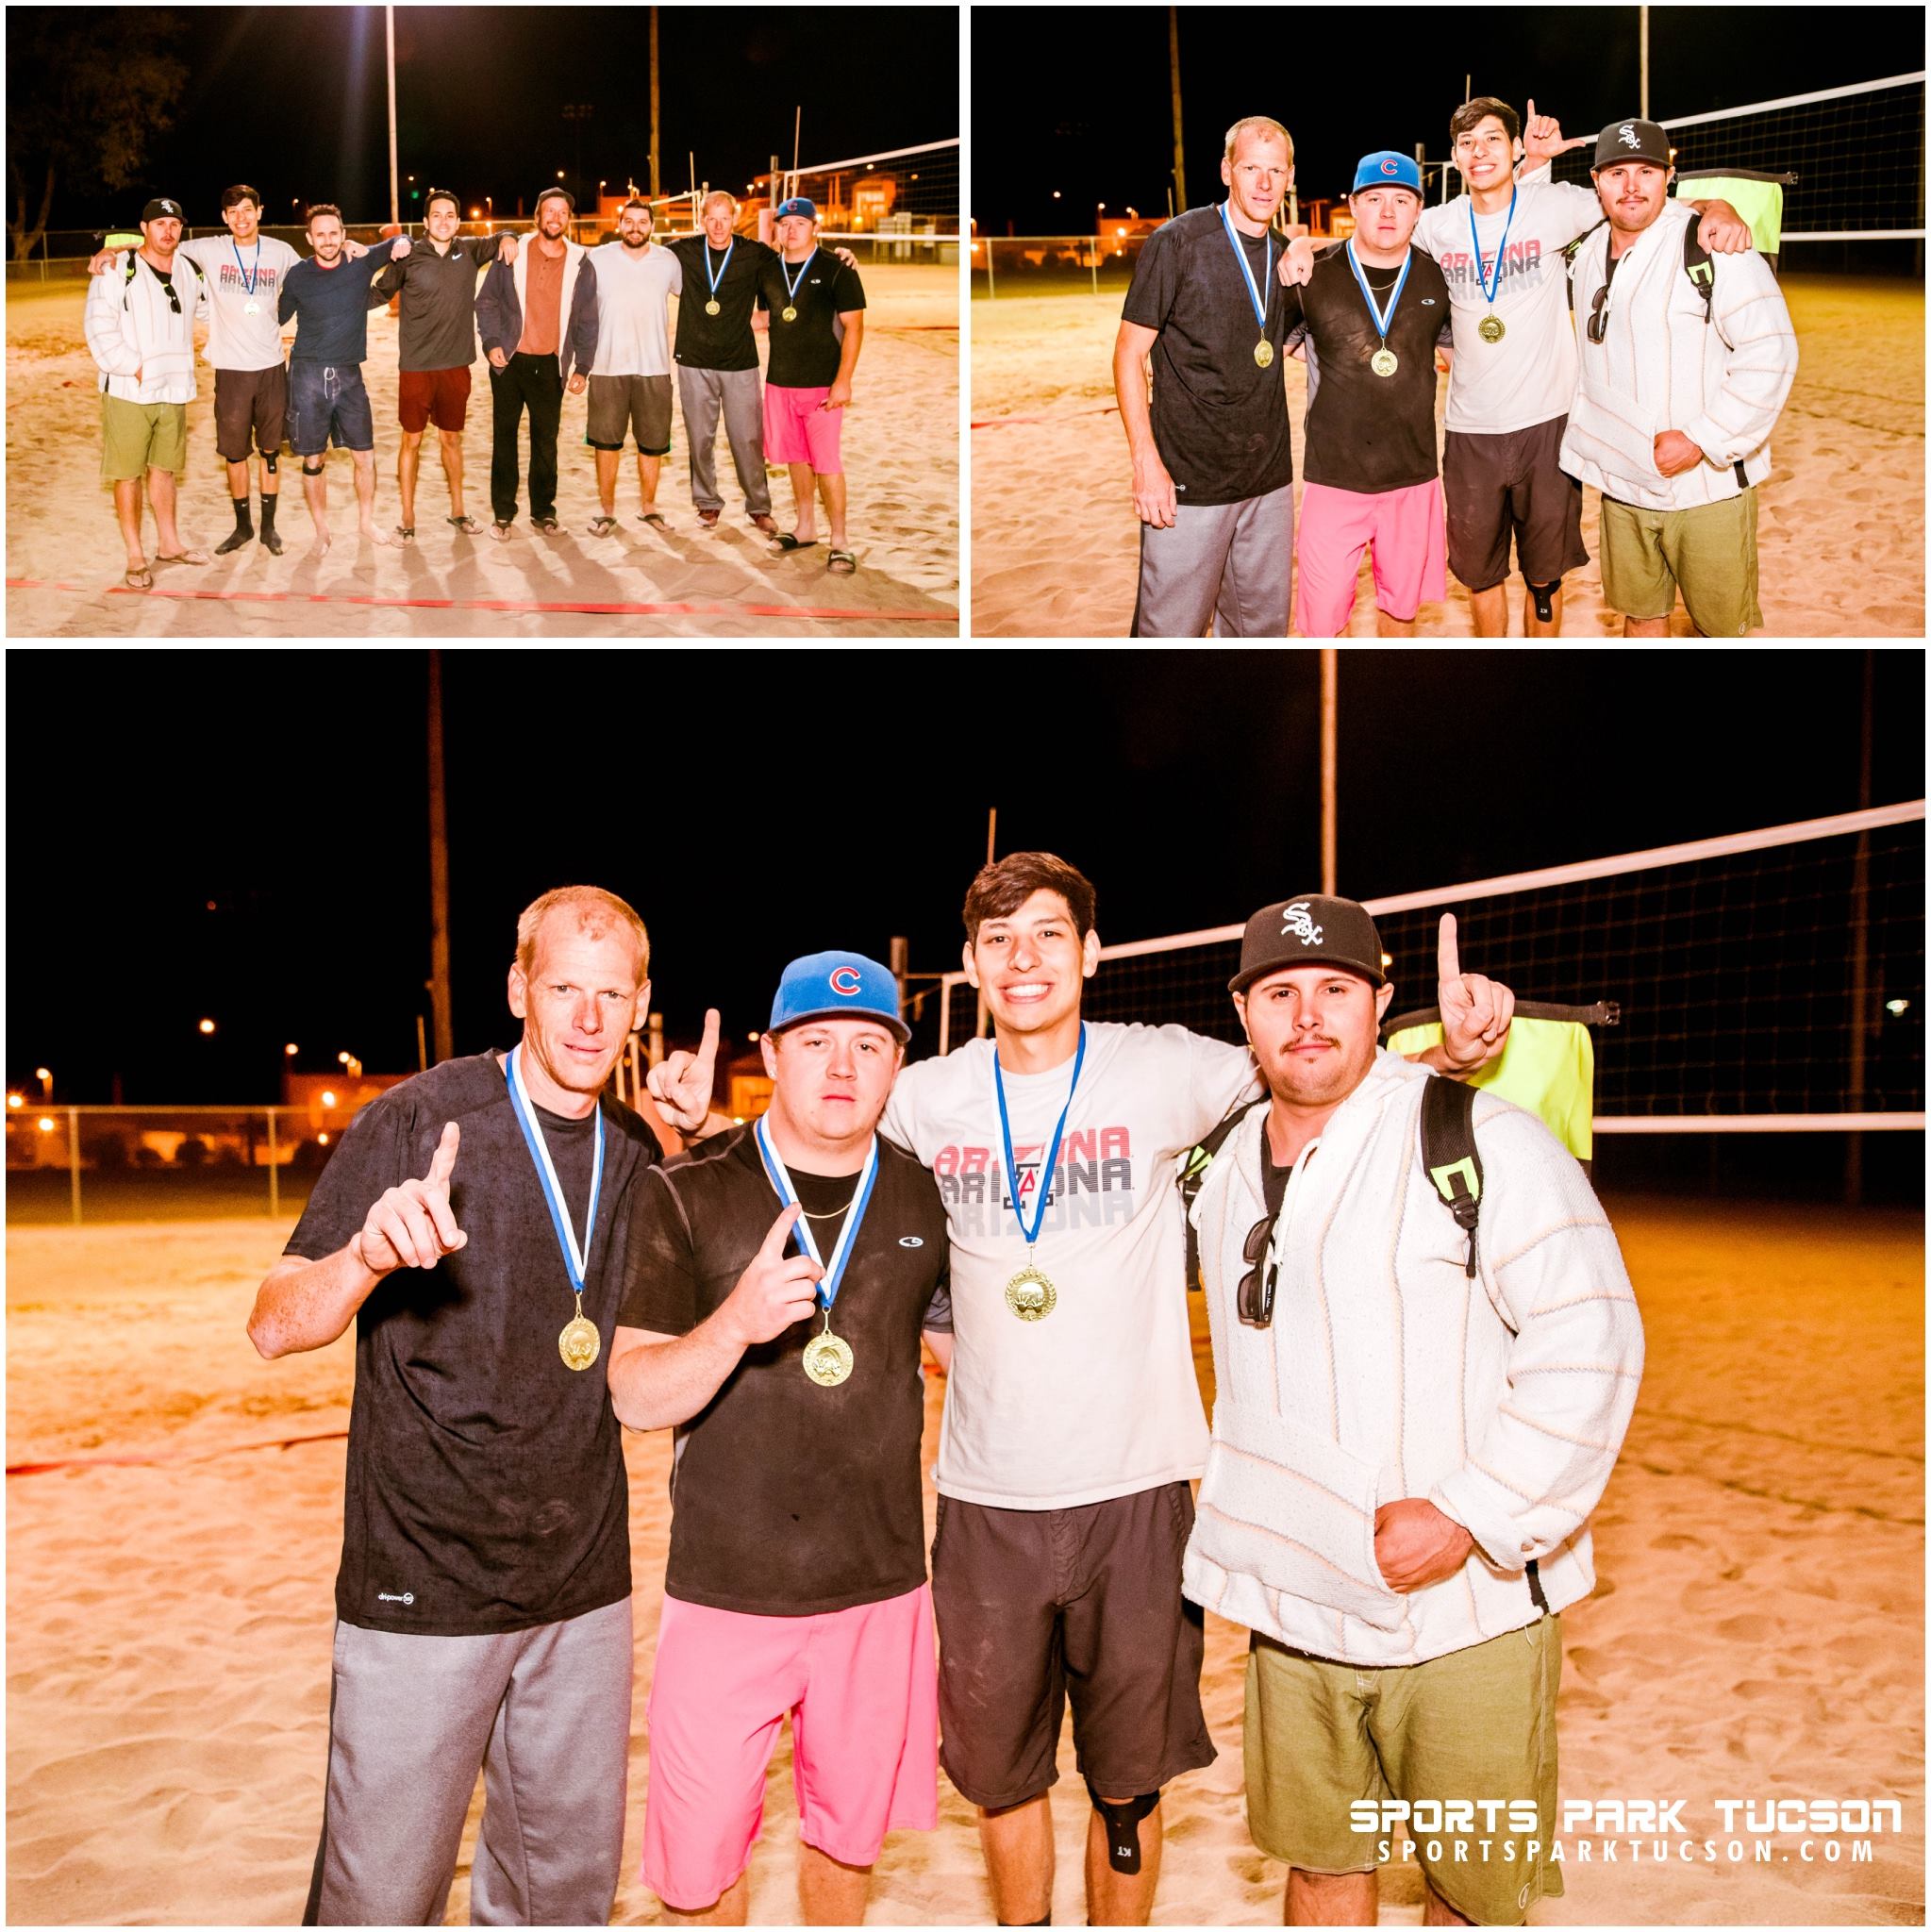 November 11th Volleyball Tournament (Men's) - 5PM Champions